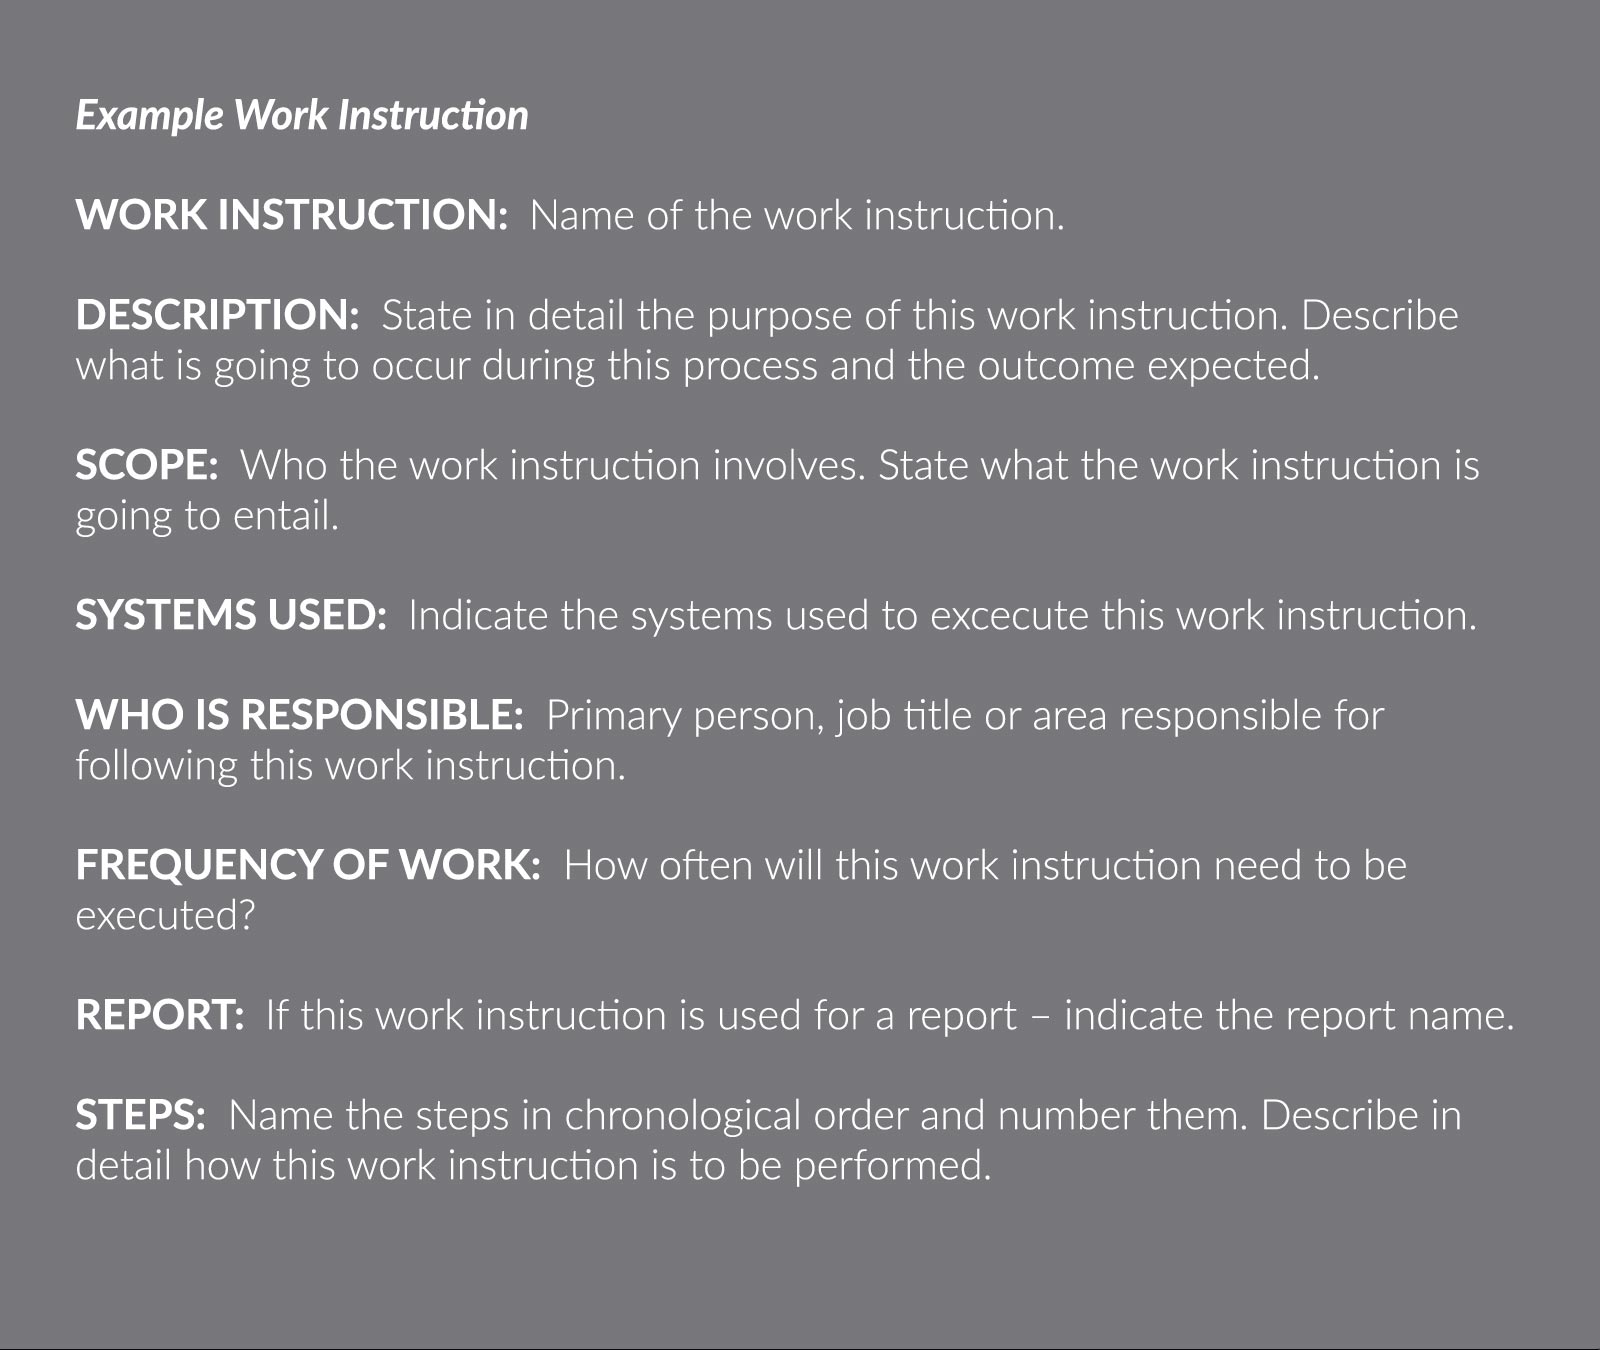 Example Work Instruction